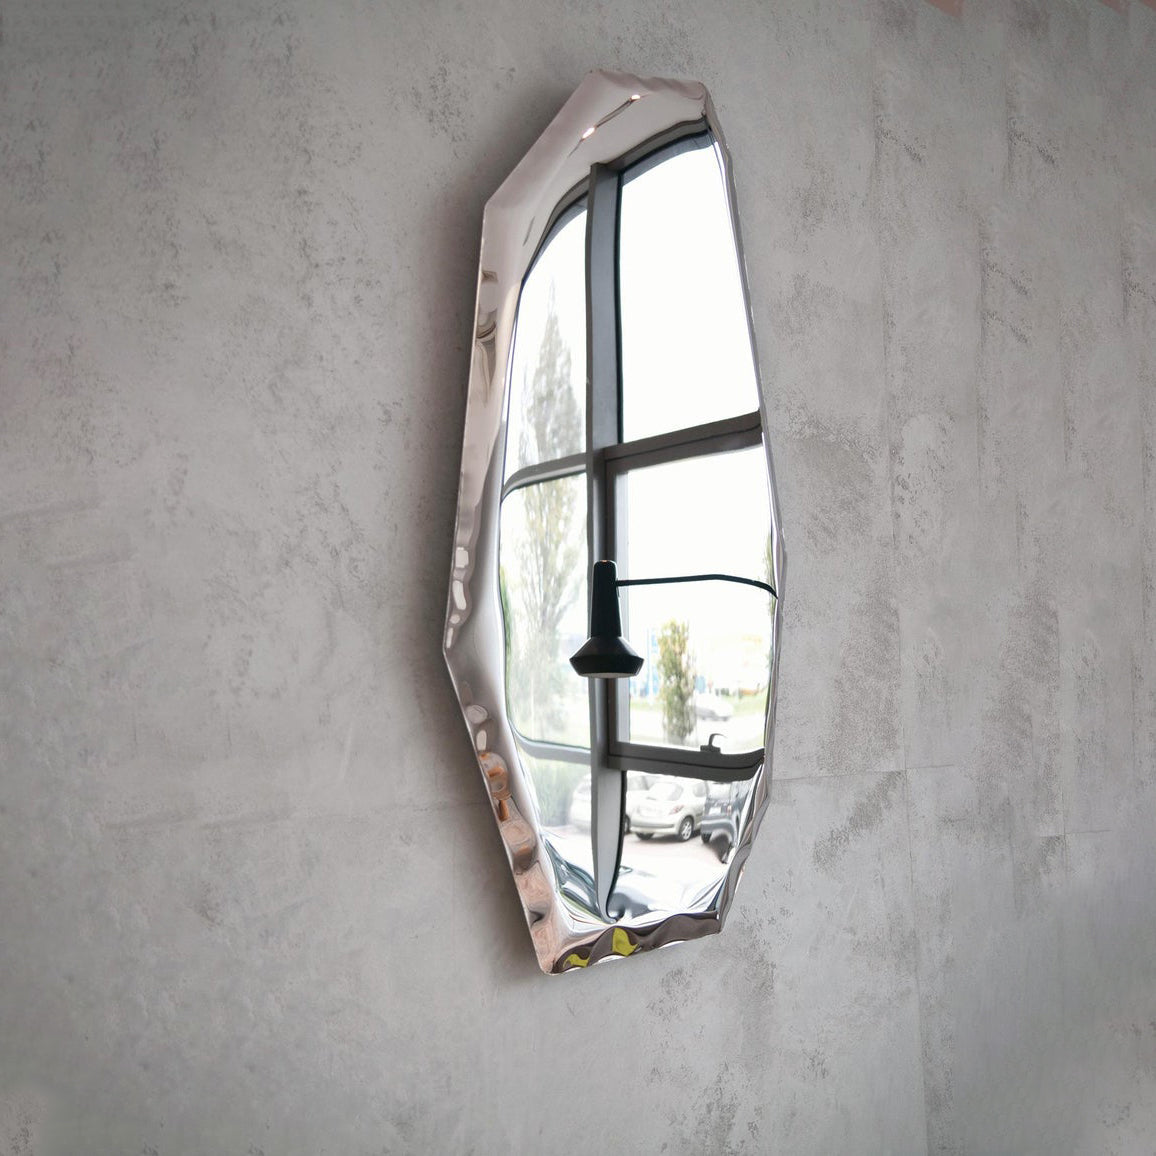 Stainless Steel Tafla C3 Sculptural Wall Mirror